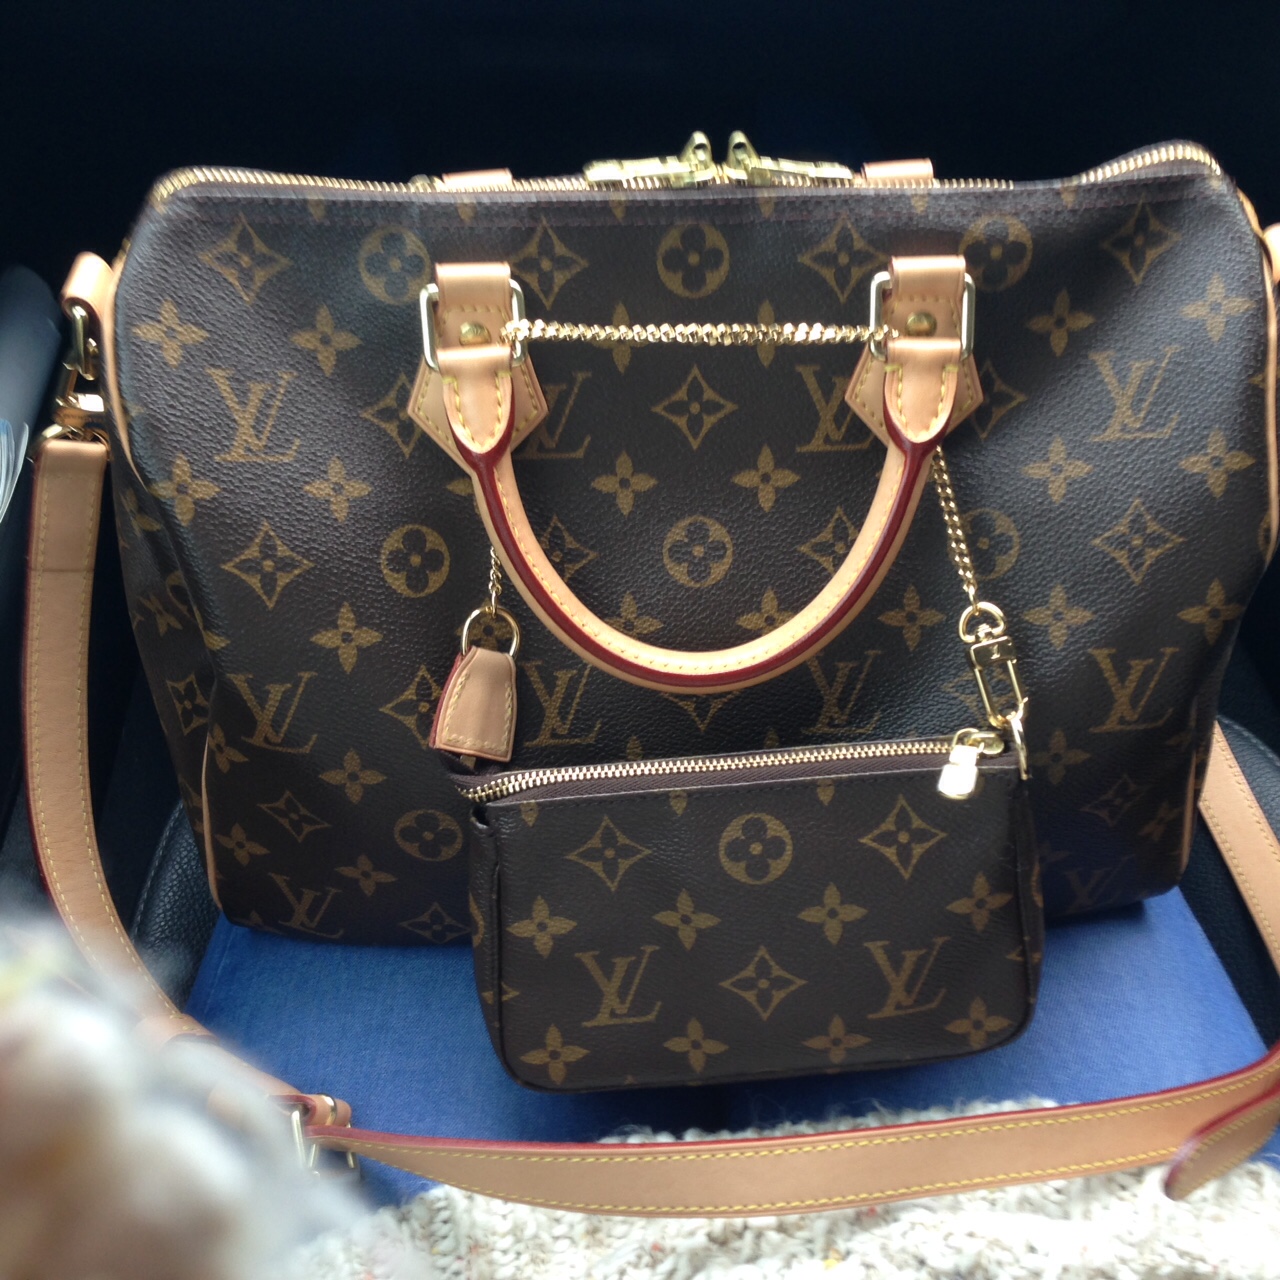 Unboxing Louis Vuitton Micro Métis, Whats In My Bag, LV Handbags Under  $2000